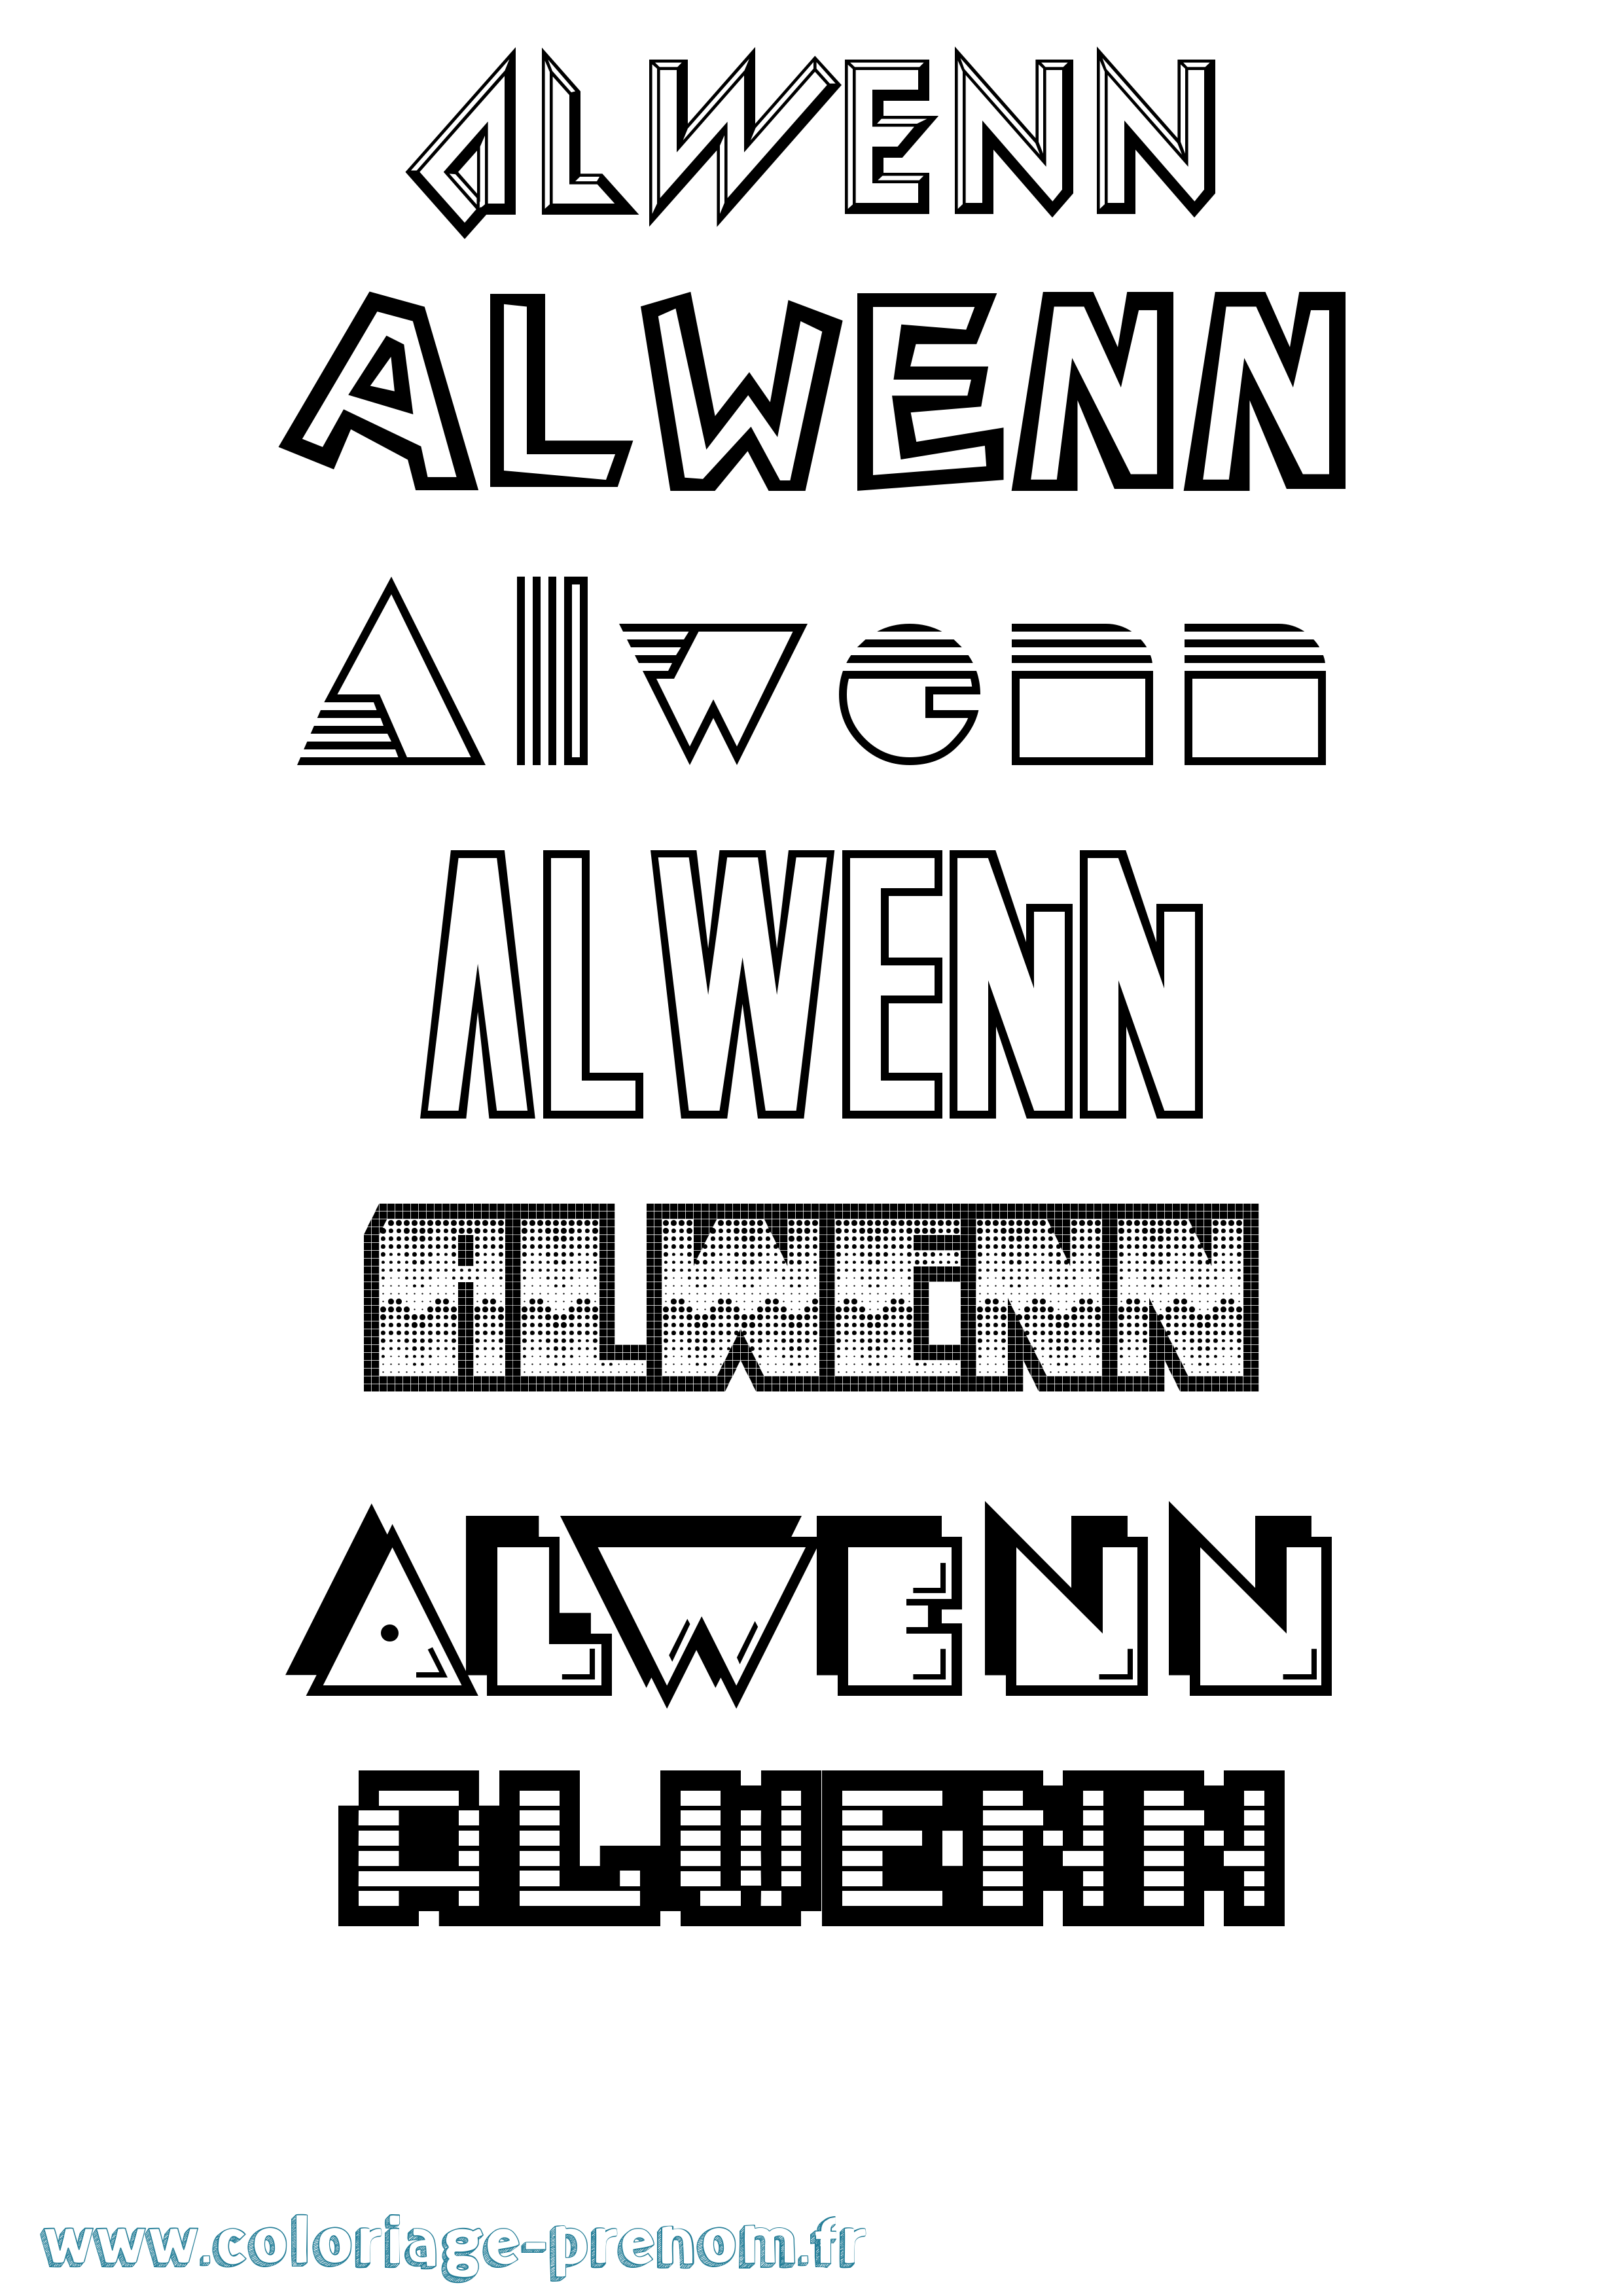 Coloriage prénom Alwenn Jeux Vidéos